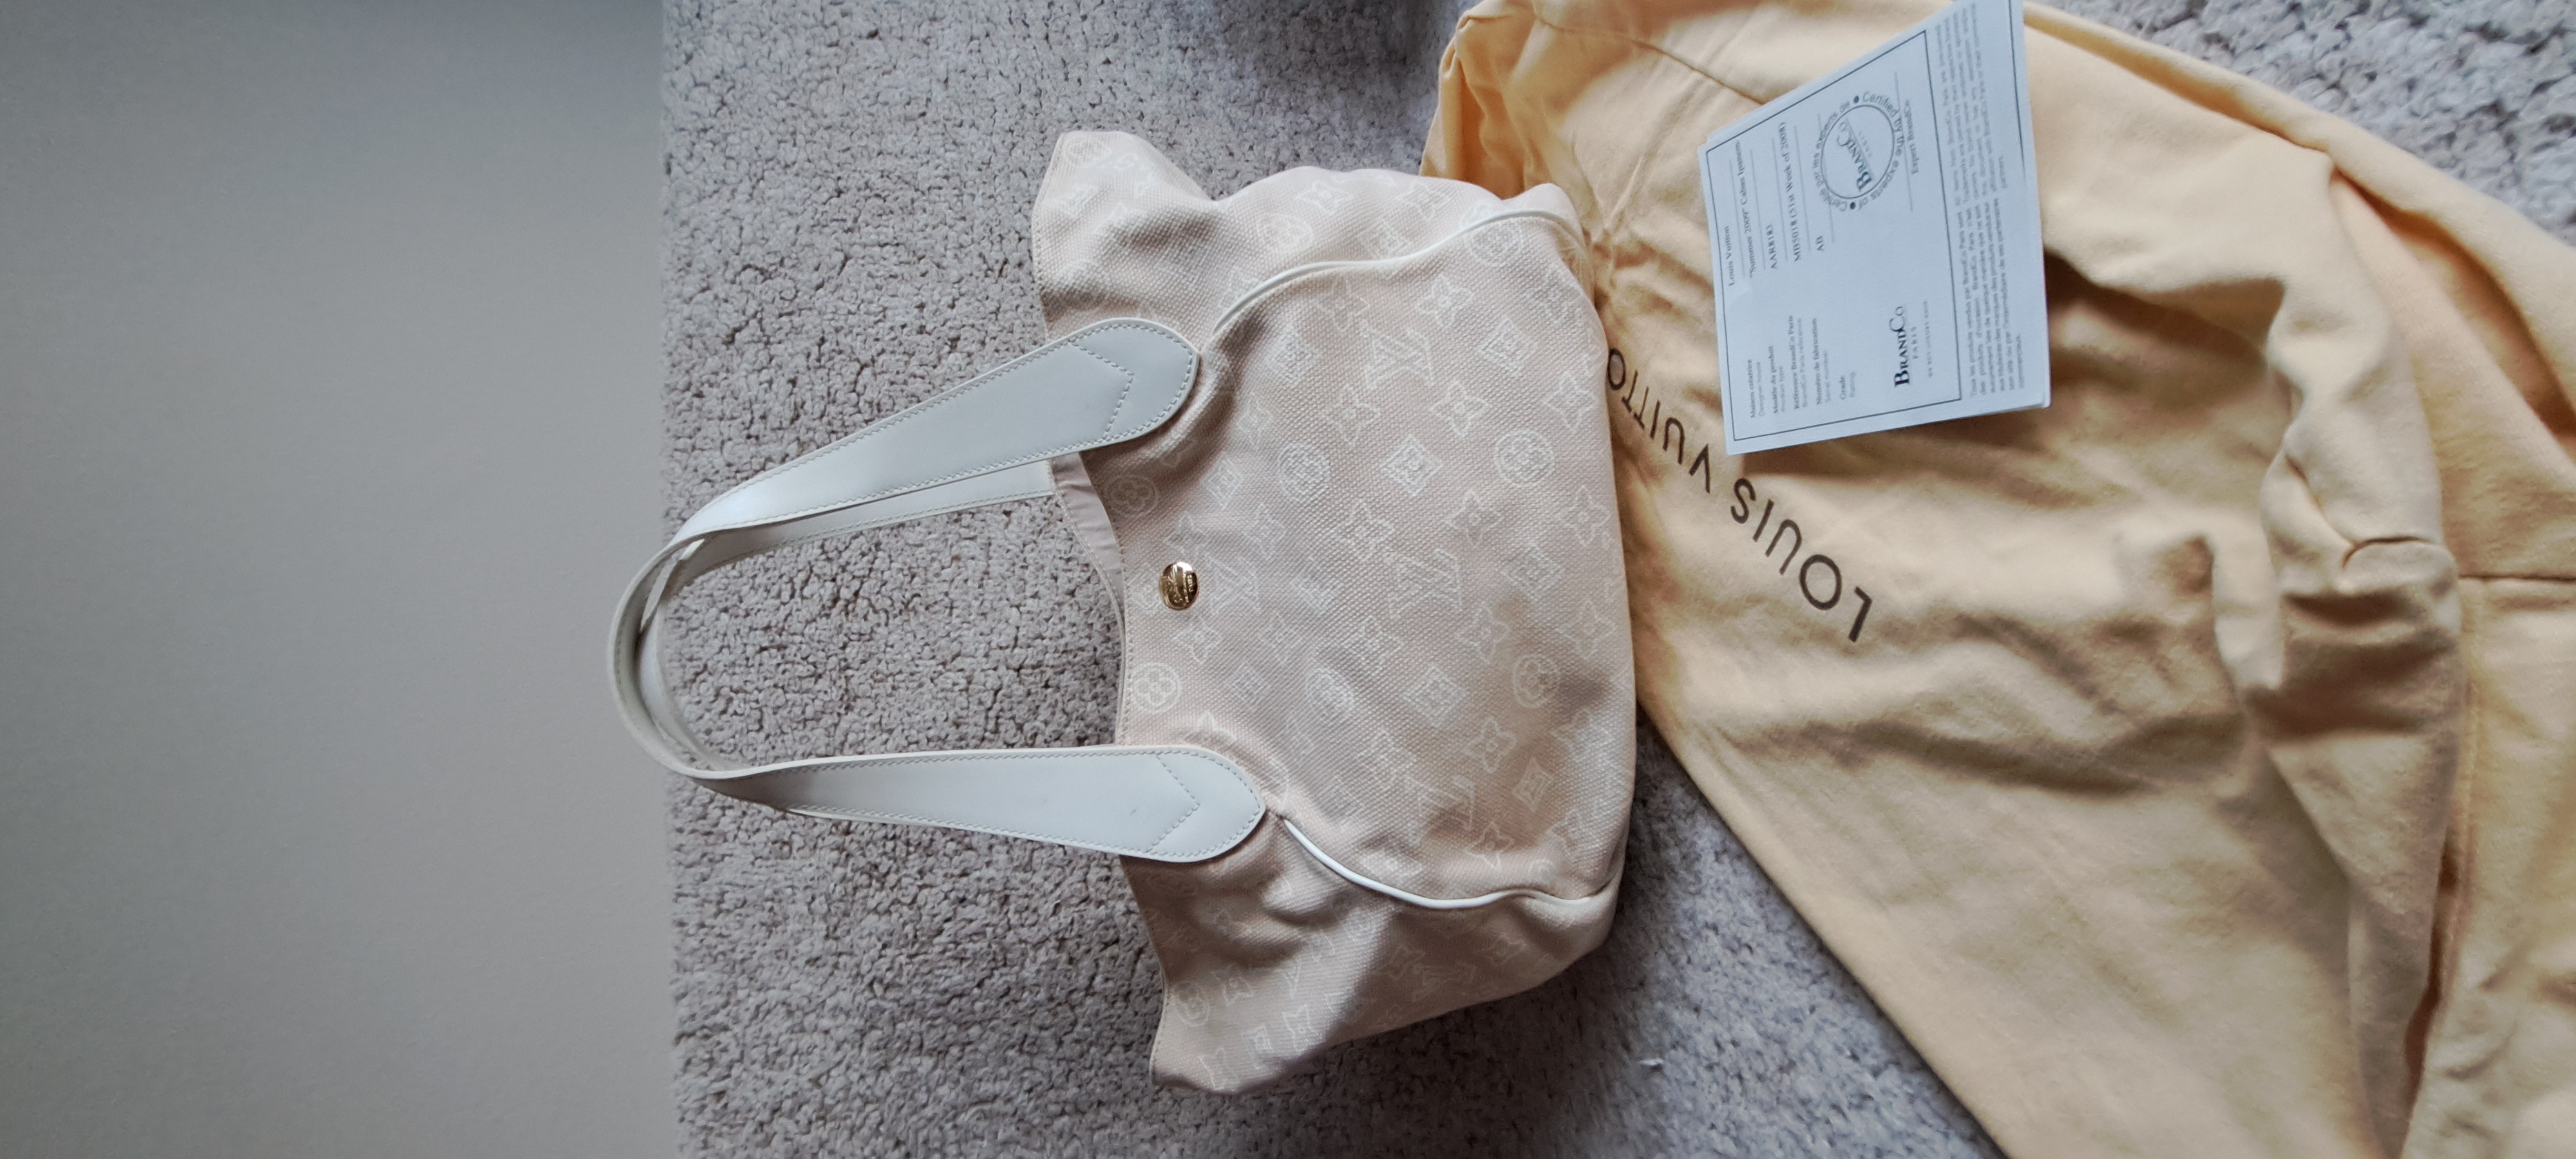 Louis Vuitton, Ltd. Ed. "Summer 2009" Cabas Ipanema White/Beige Monogram Shoulder Bag - Image 8 of 22